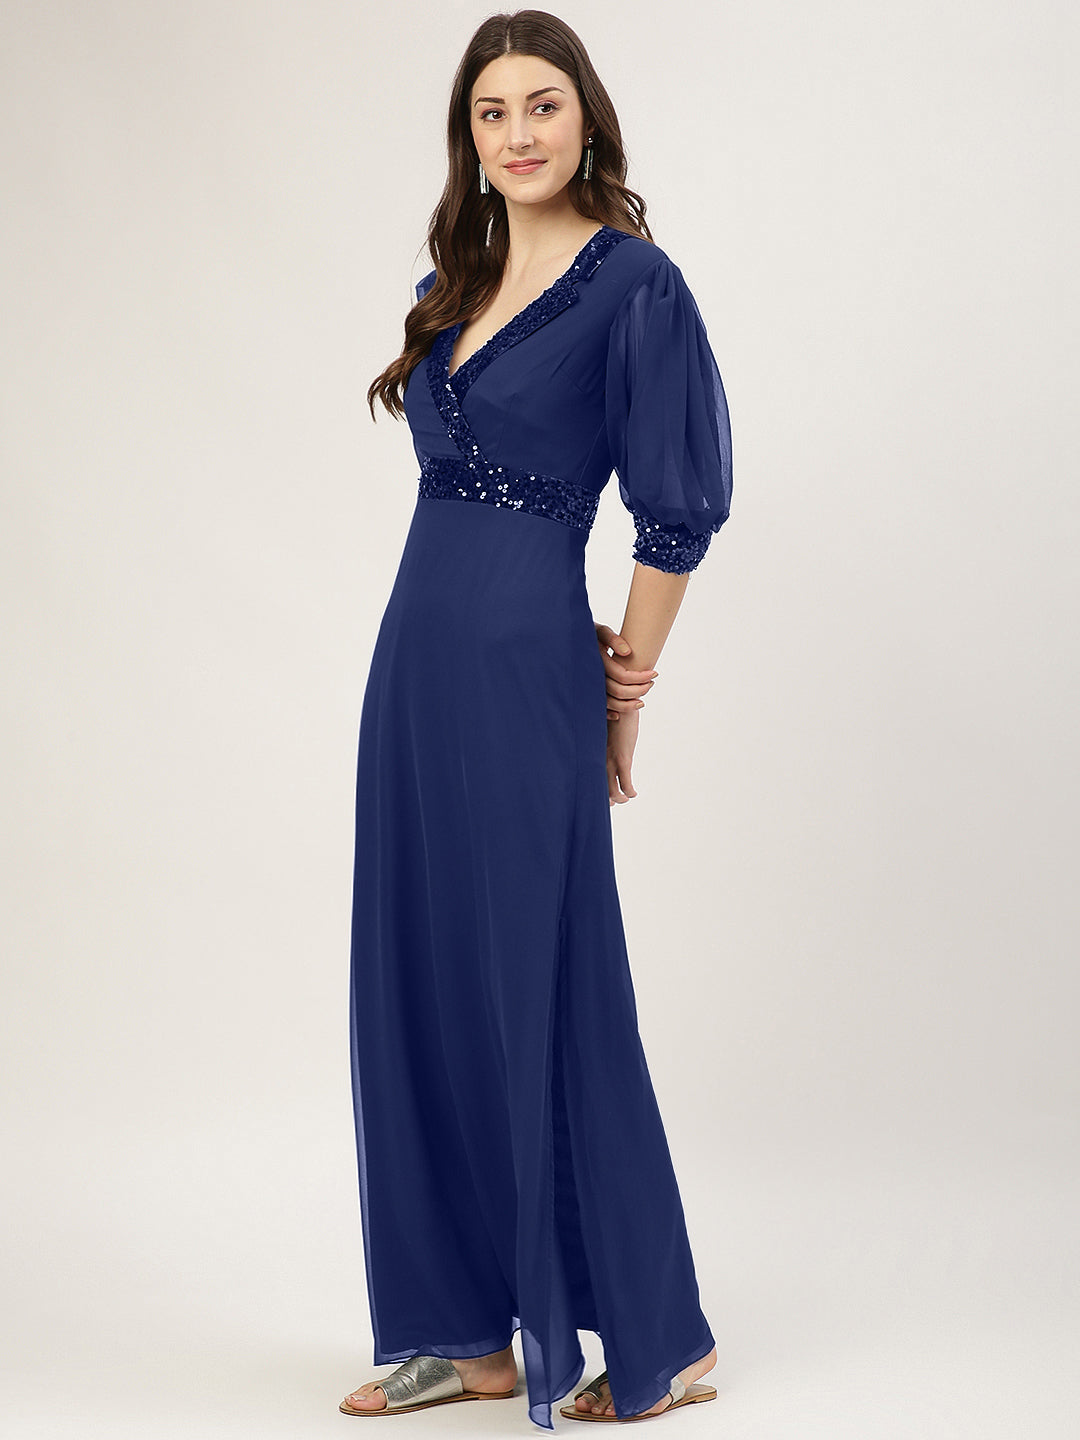 Navy Blue Embellished Slit Long Dress with 3/4 Sleeves